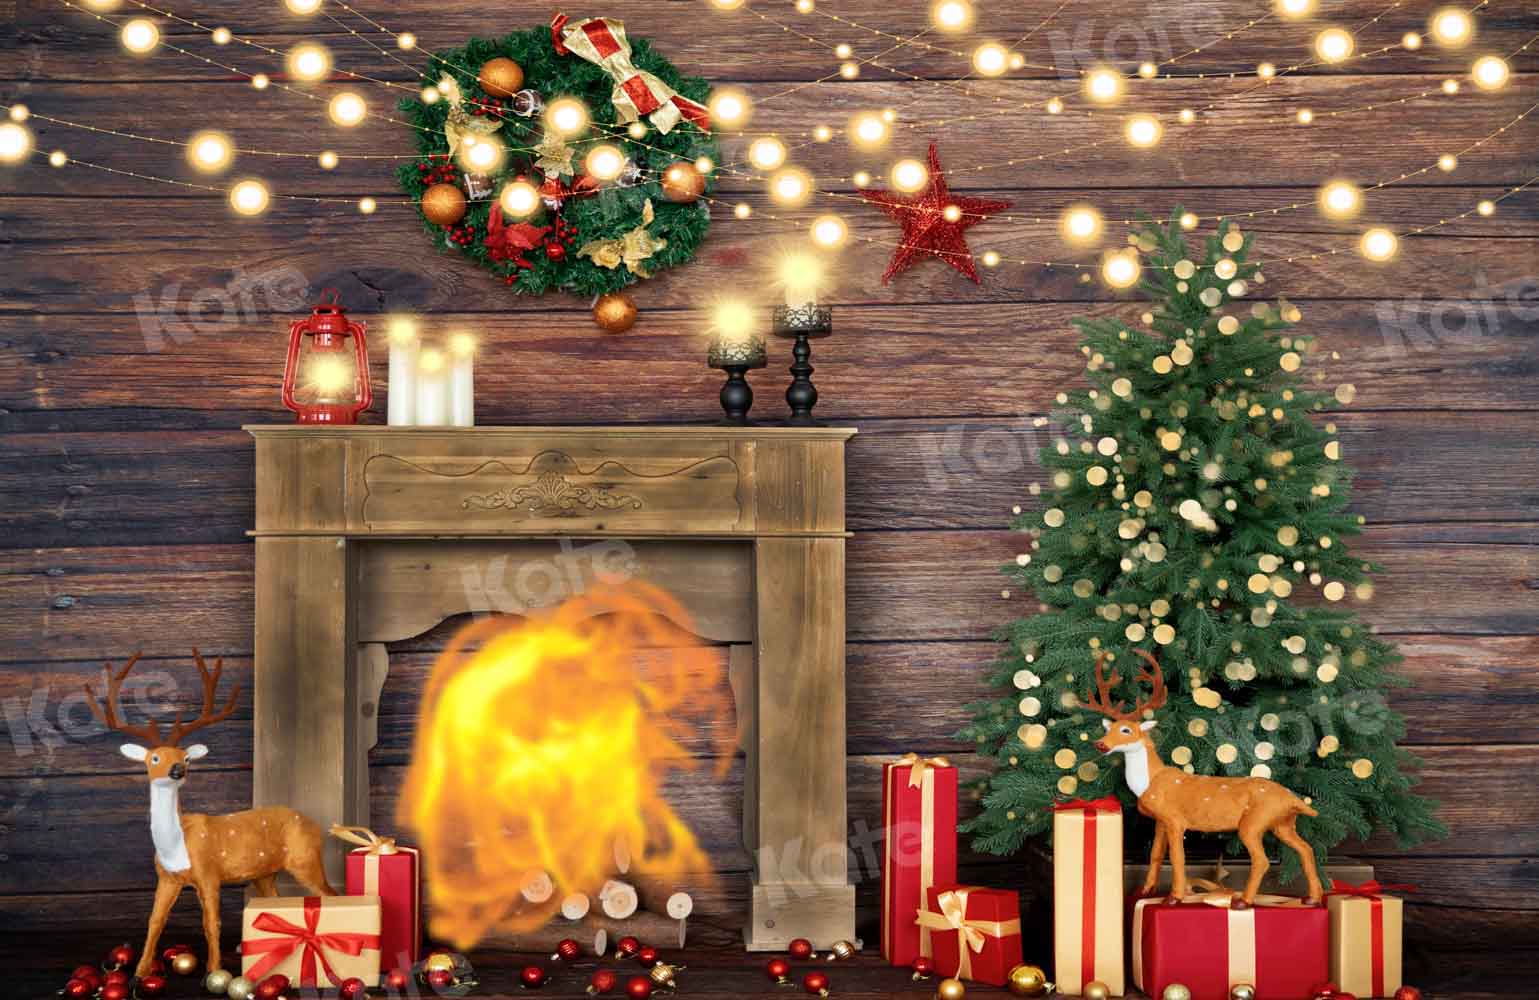 Kateクリスマス暖炉の背景ウッドハウス